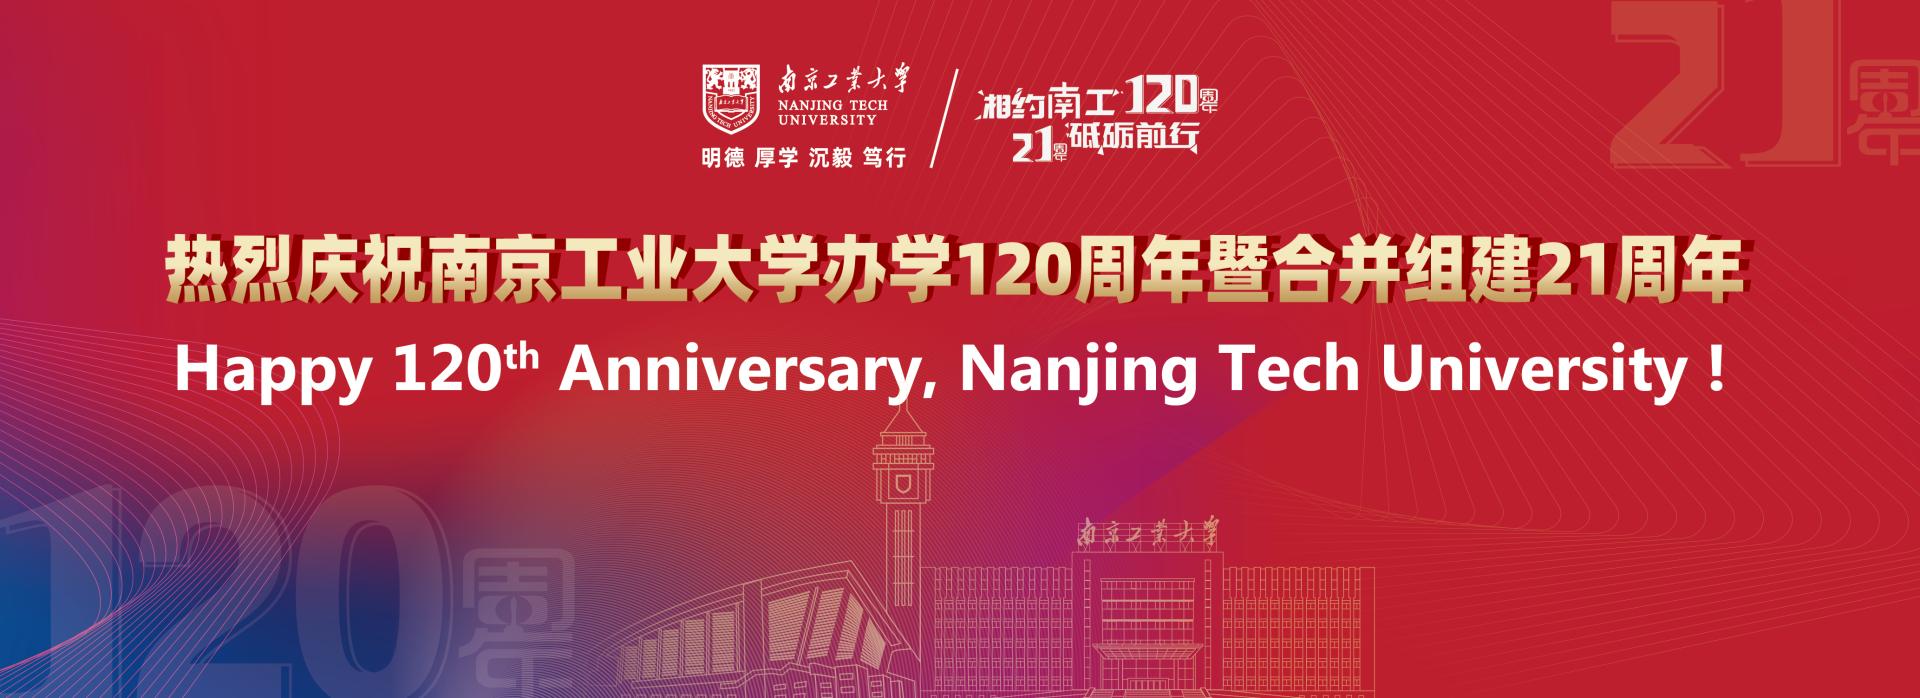 Happy 120th Anniversary, Nanjing Tech University!